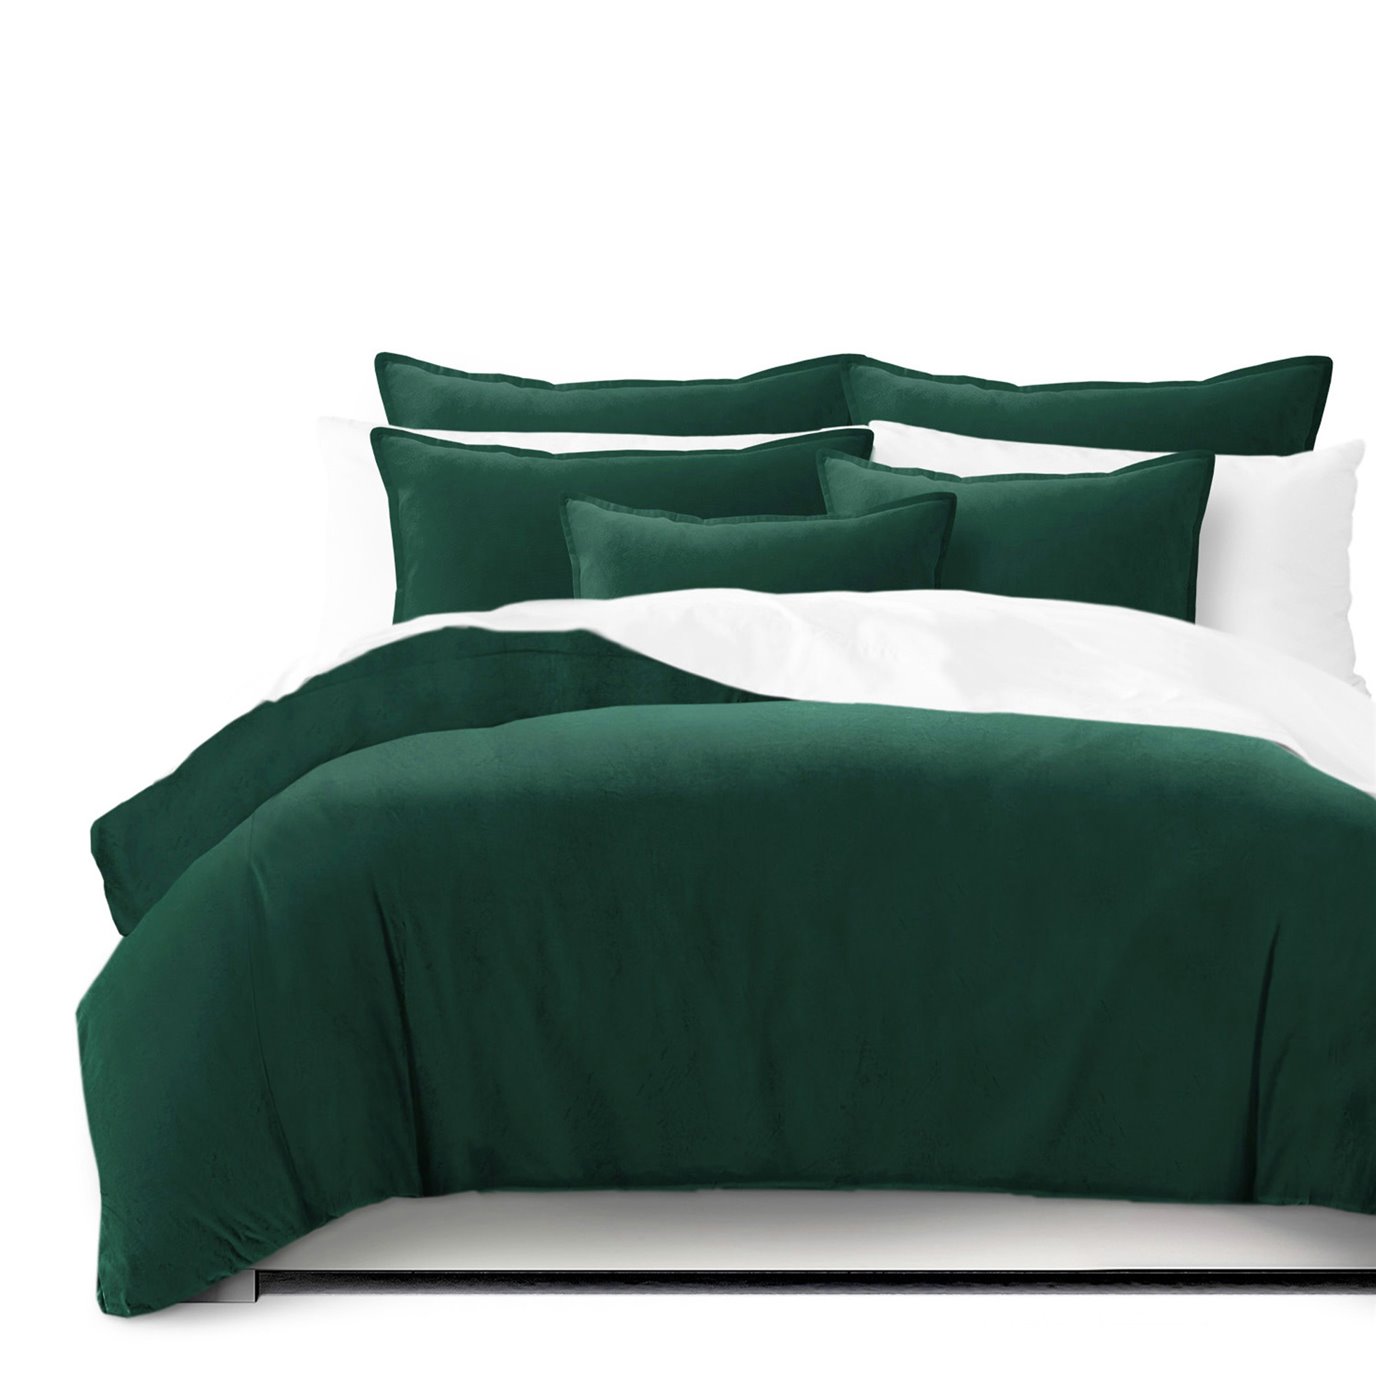 Vanessa Emerald Coverlet and Pillow Sham(s) Set - Size Full